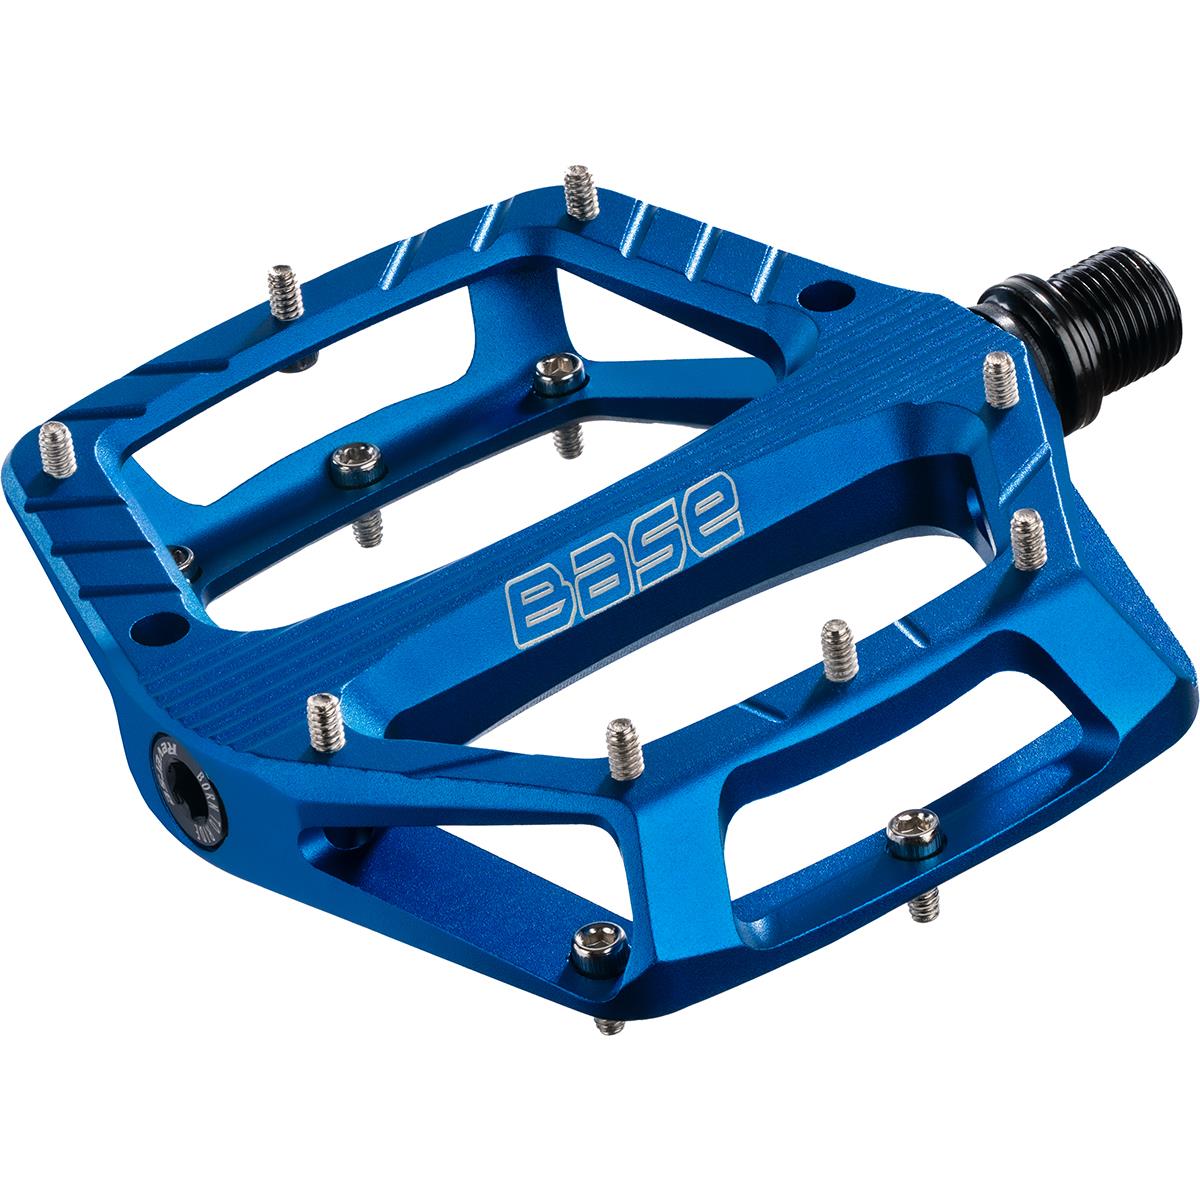 Reverse Components Pedals Base Blue